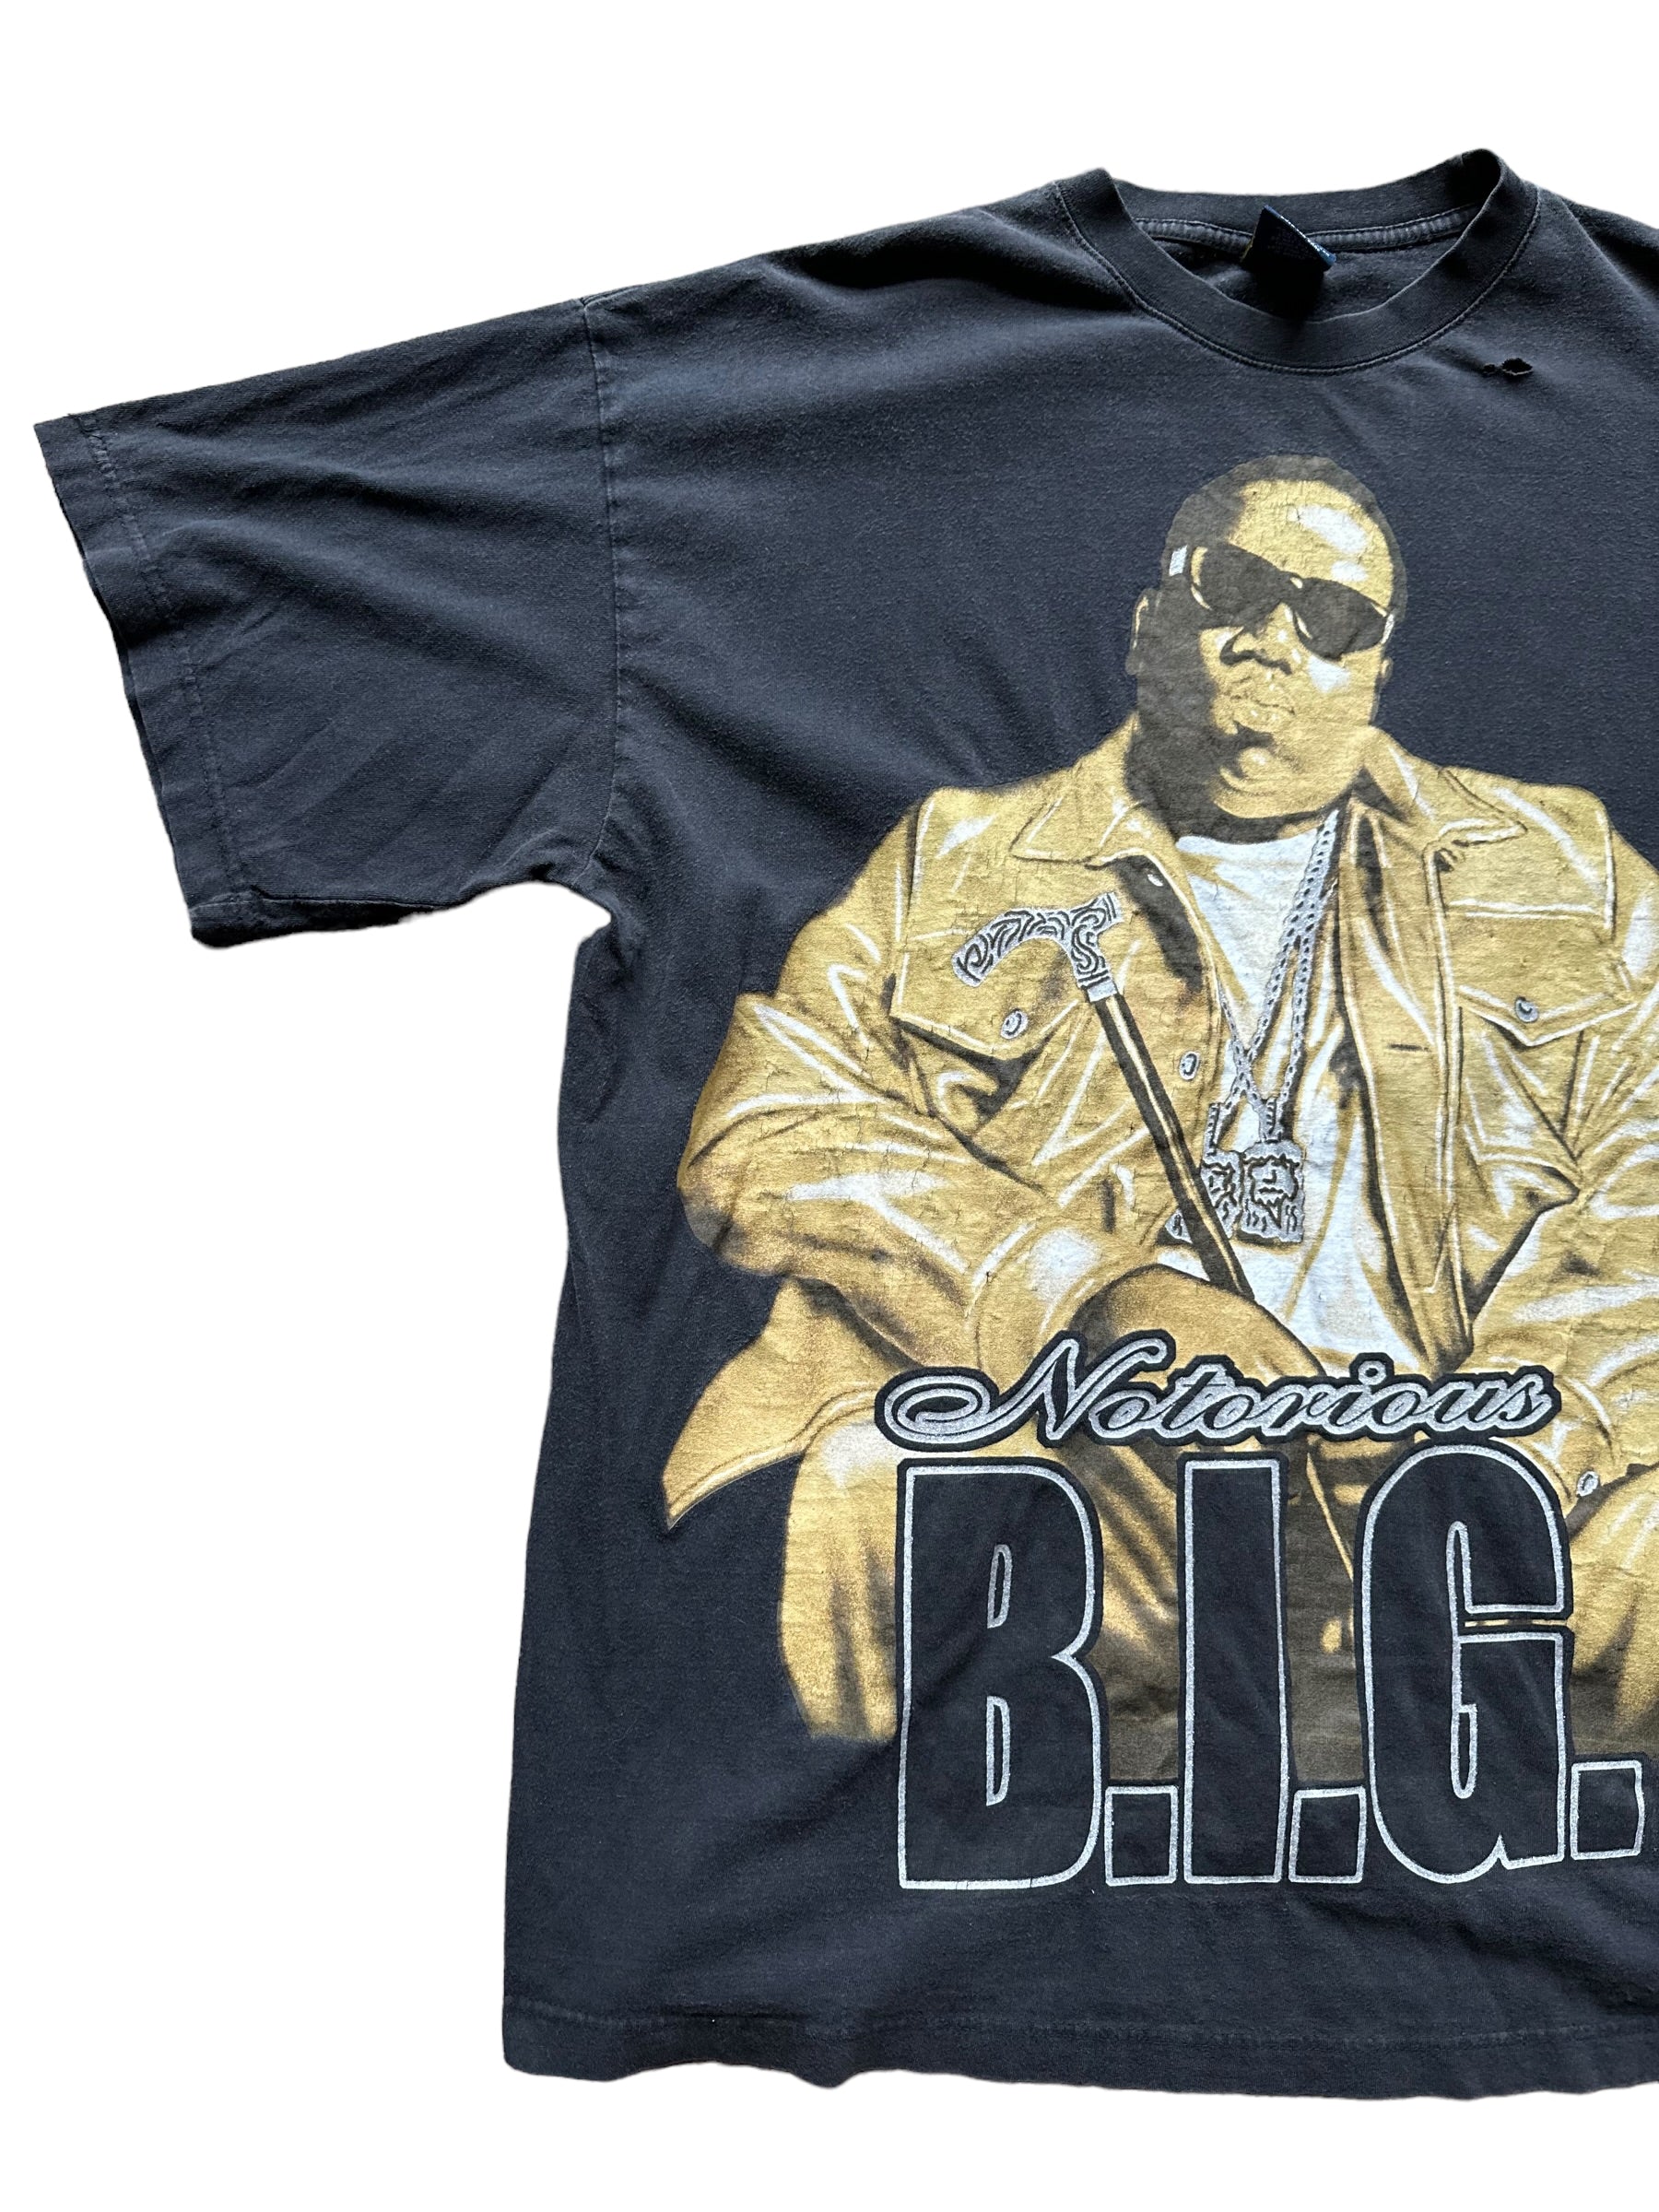 Right Sleeve View of Vintage Biggie Smalls Notorious BIG Rap Tee SZ XXL |  Vintage Rap Tees Biggy Smalls |  Christopher Wallace Notorious B.I.G.